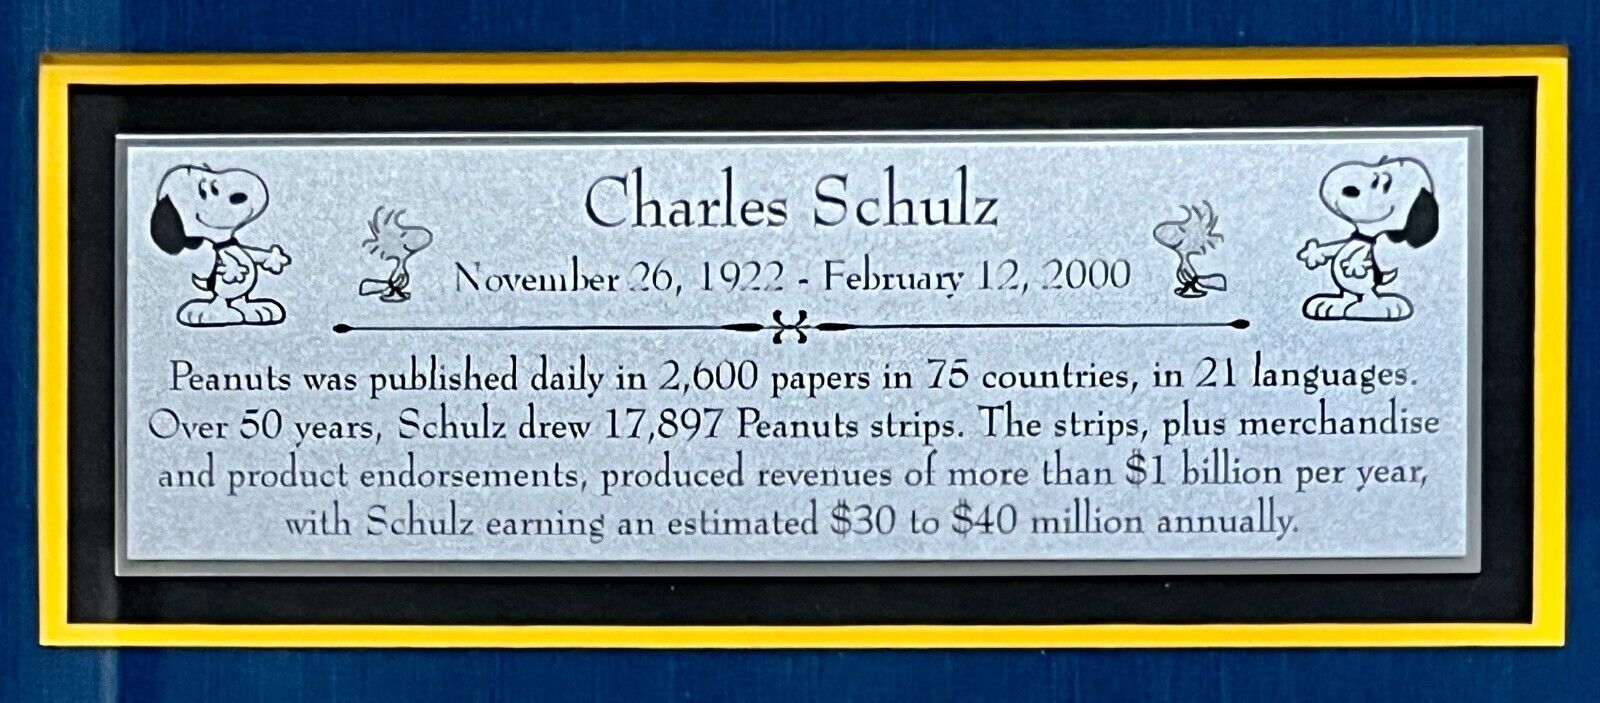 Charles M. Schulz d.2000(Charlie Brown-Peanuts) signed custom framed display-PSA